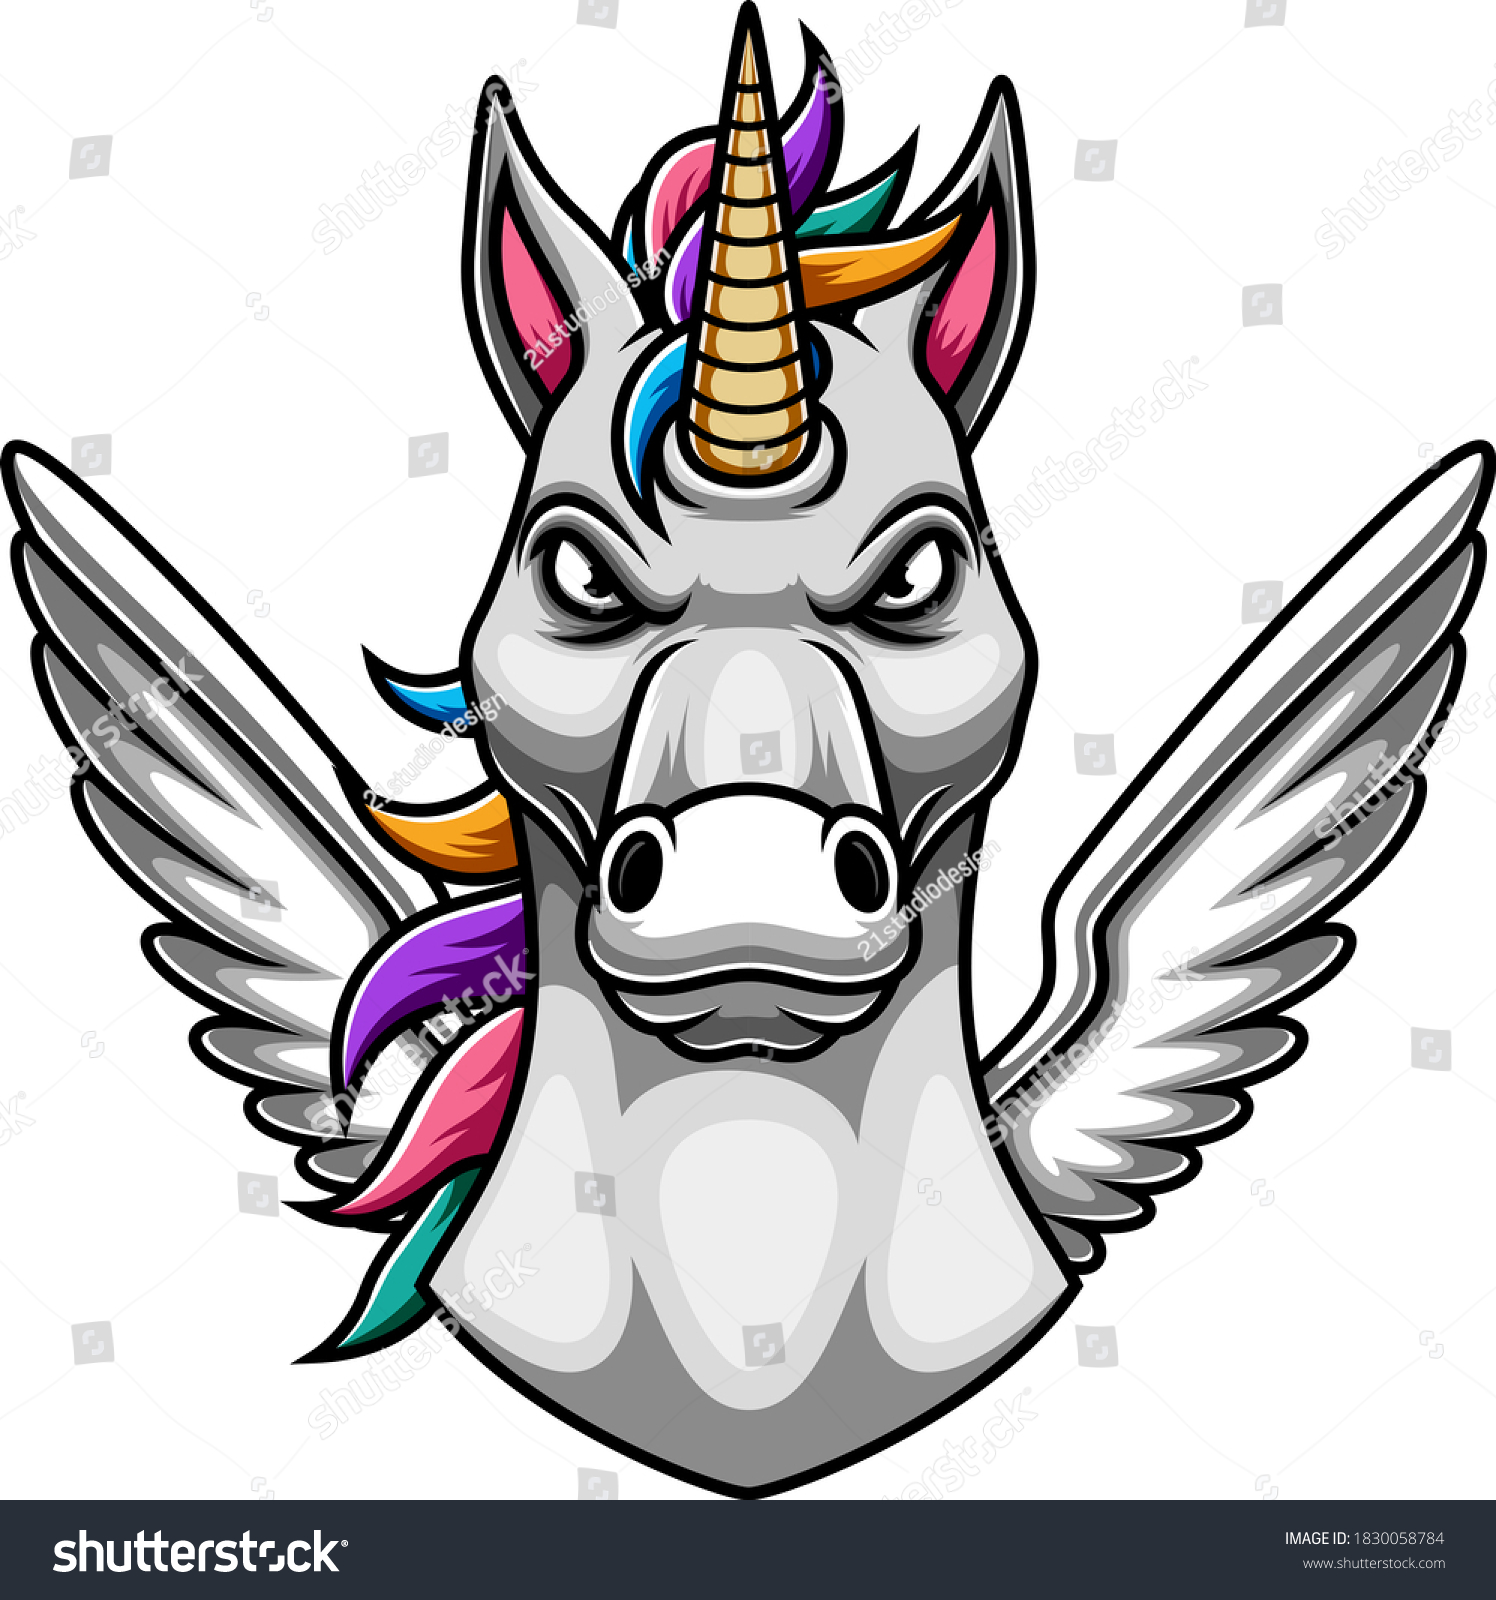 SVG of Unicorn mascot logo design of illustration svg